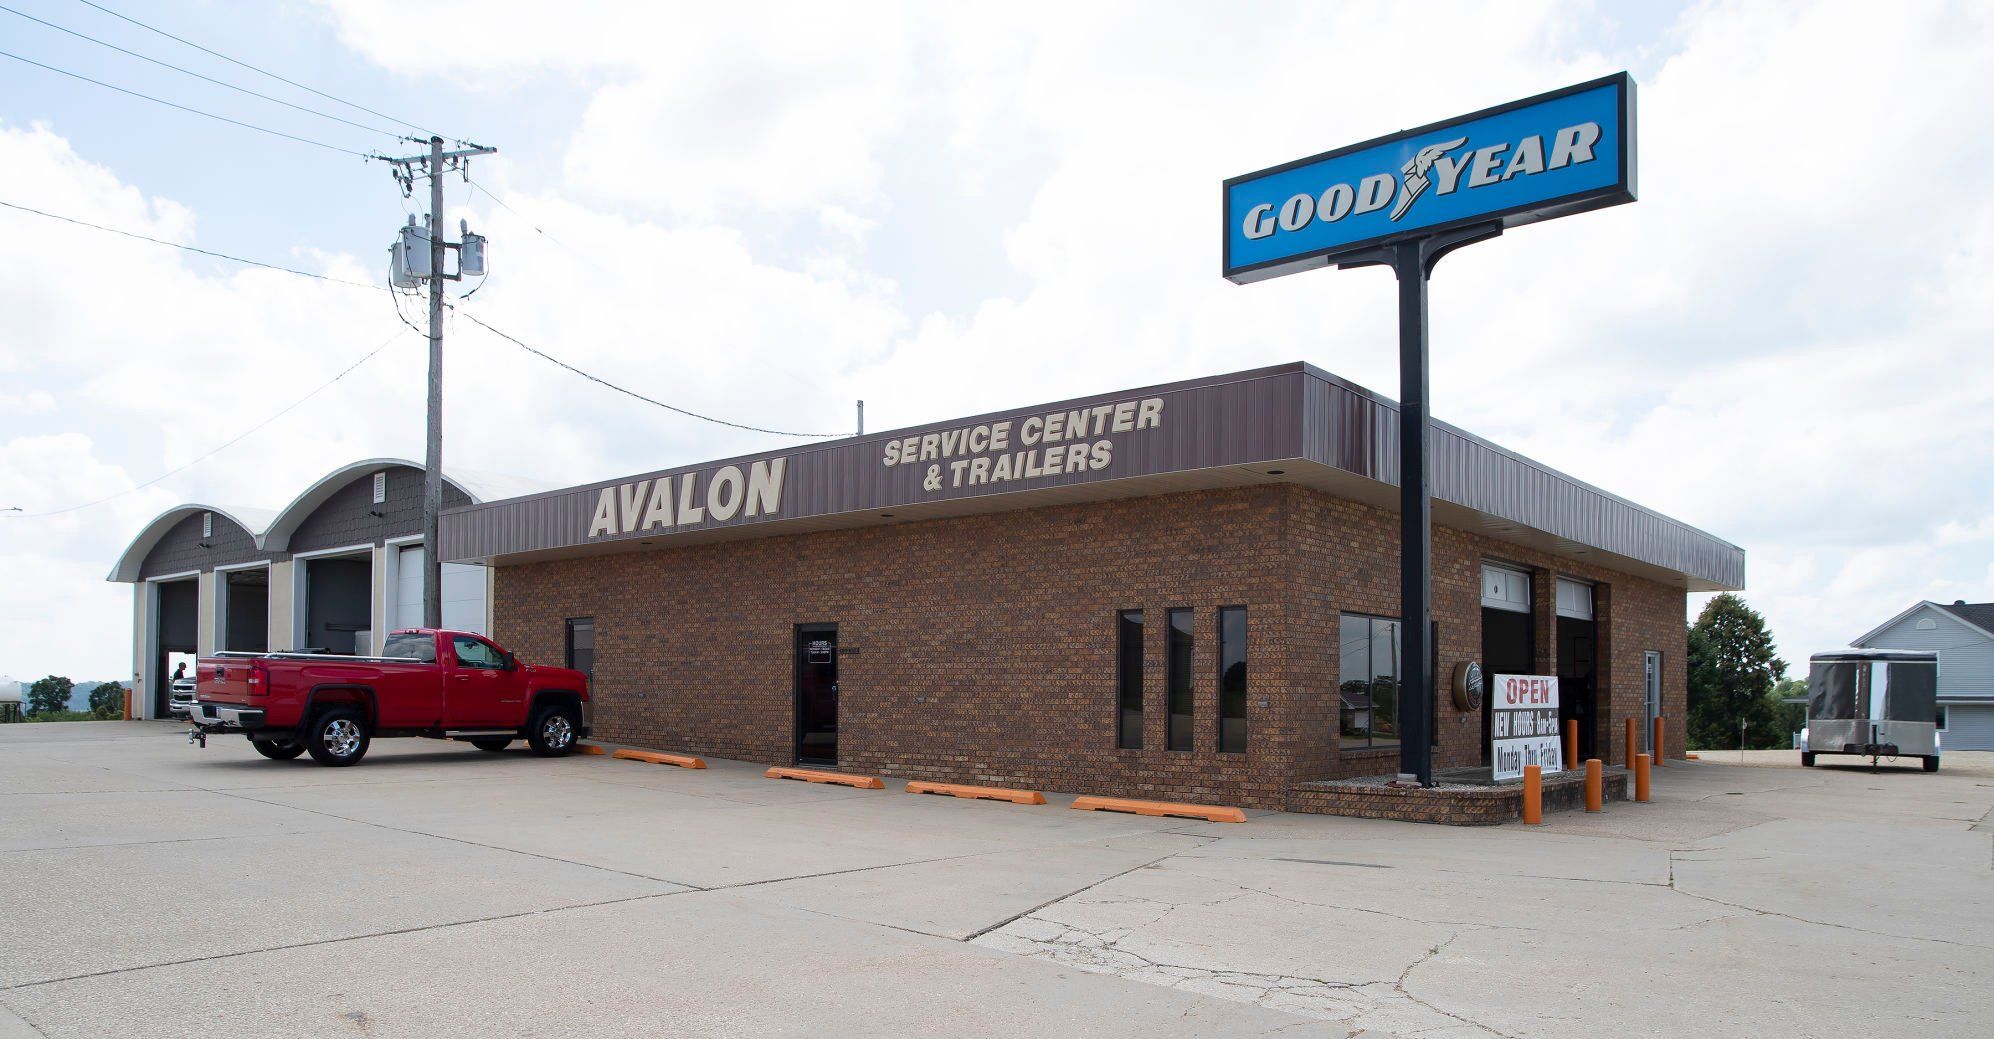 Avalon Service Center in Rickardsville, Iowa on Friday, August 5, 2022.    PHOTO CREDIT: Stephen Gassman